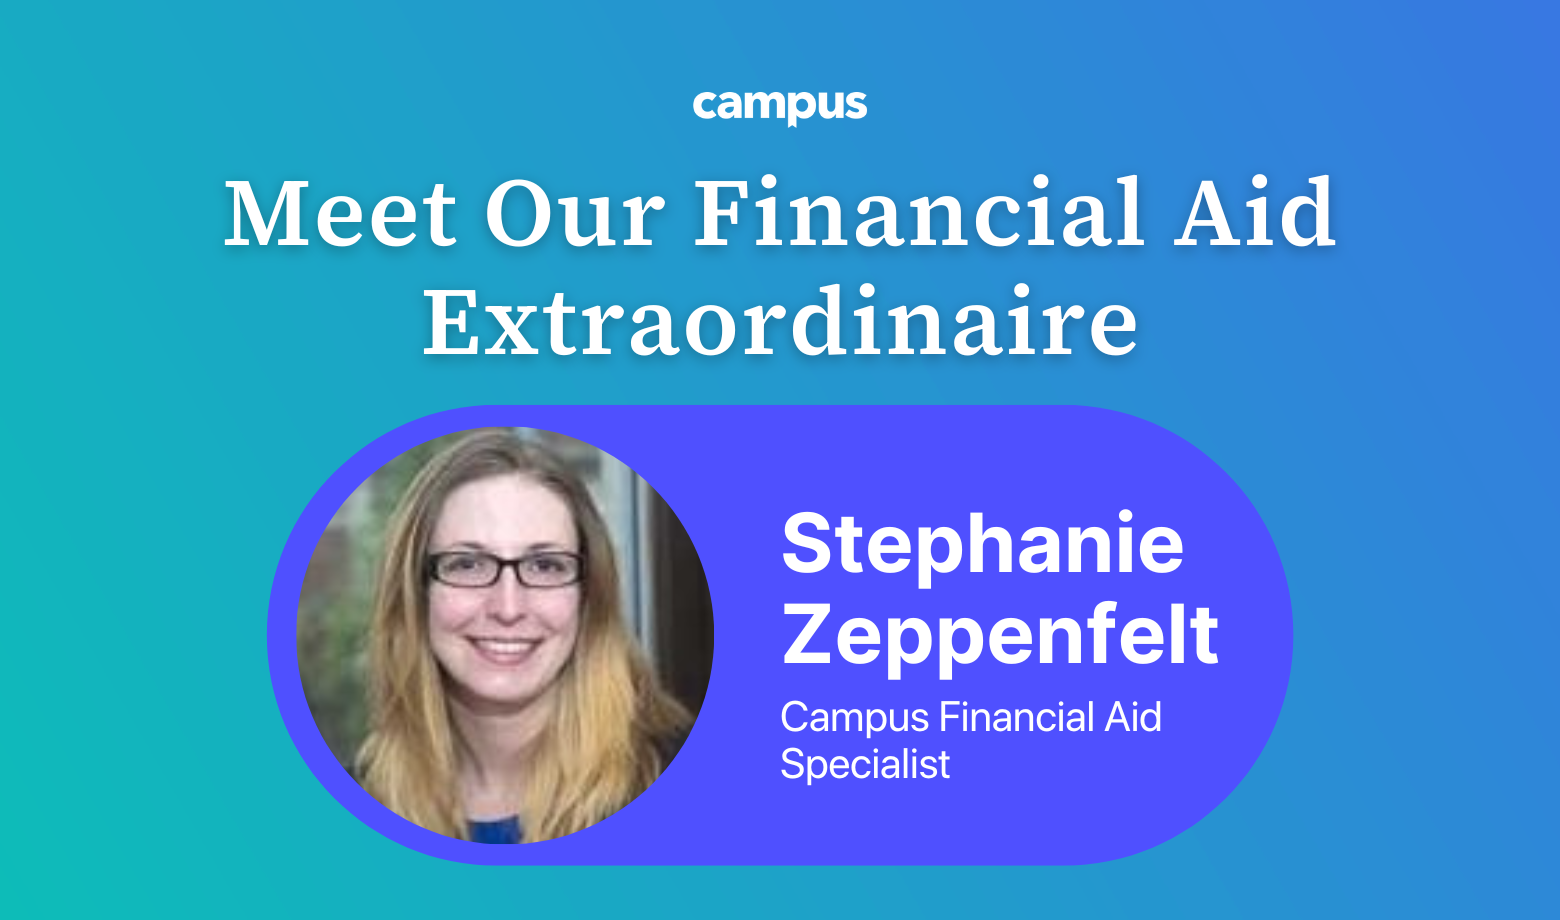 Meet Campus Financial Aid Extraordinaire, Stephanie Zeppenfelt